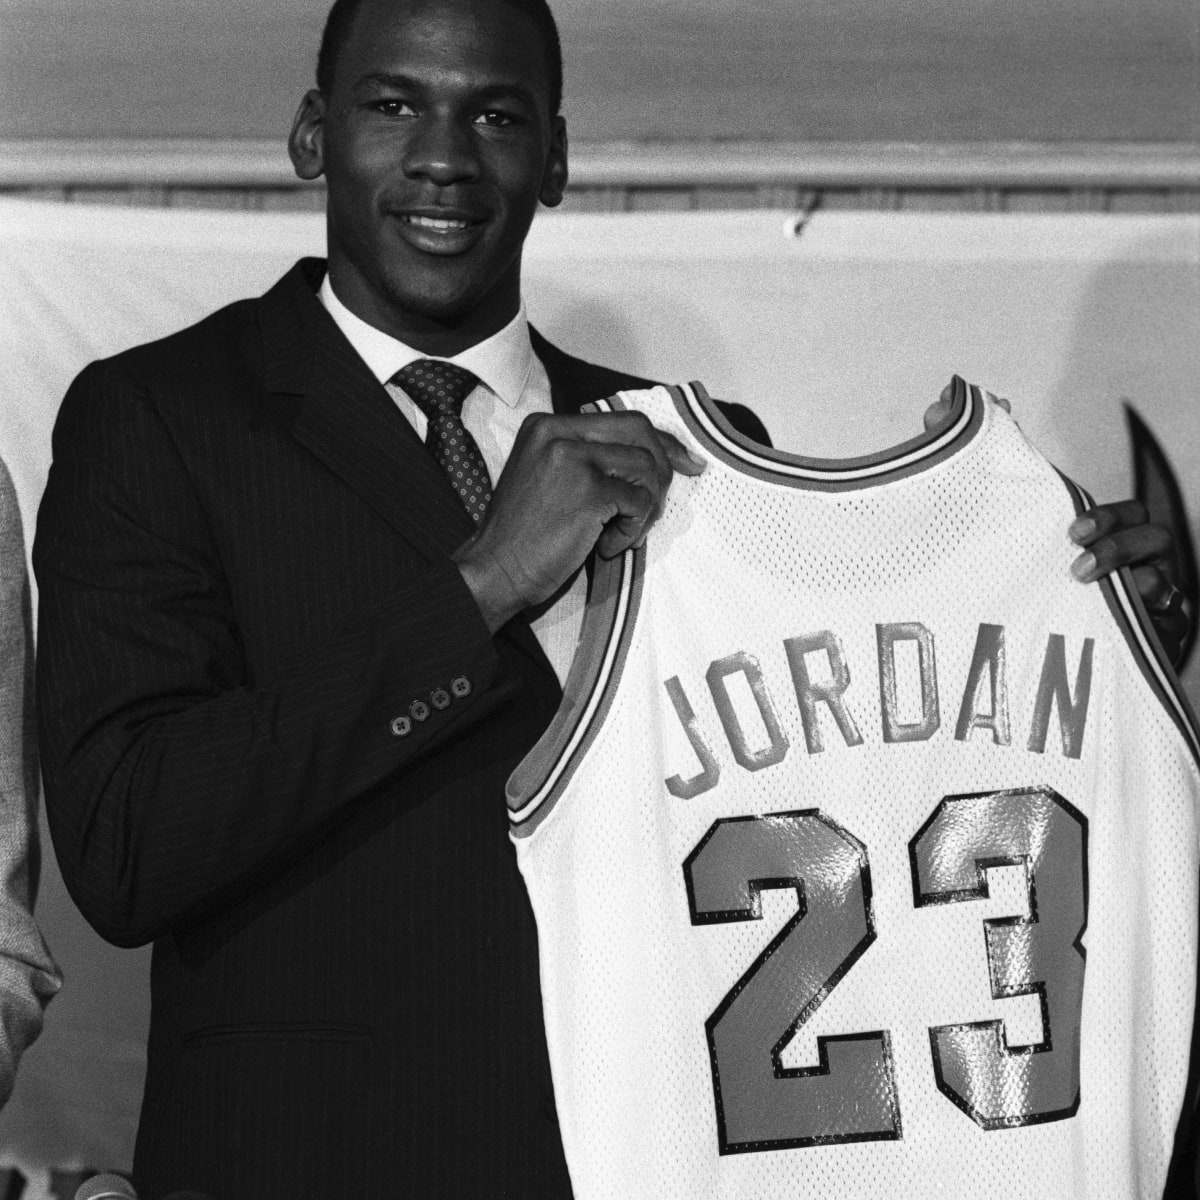 Jordan, Shirts, Jordan Hockey Jersey Very Rare